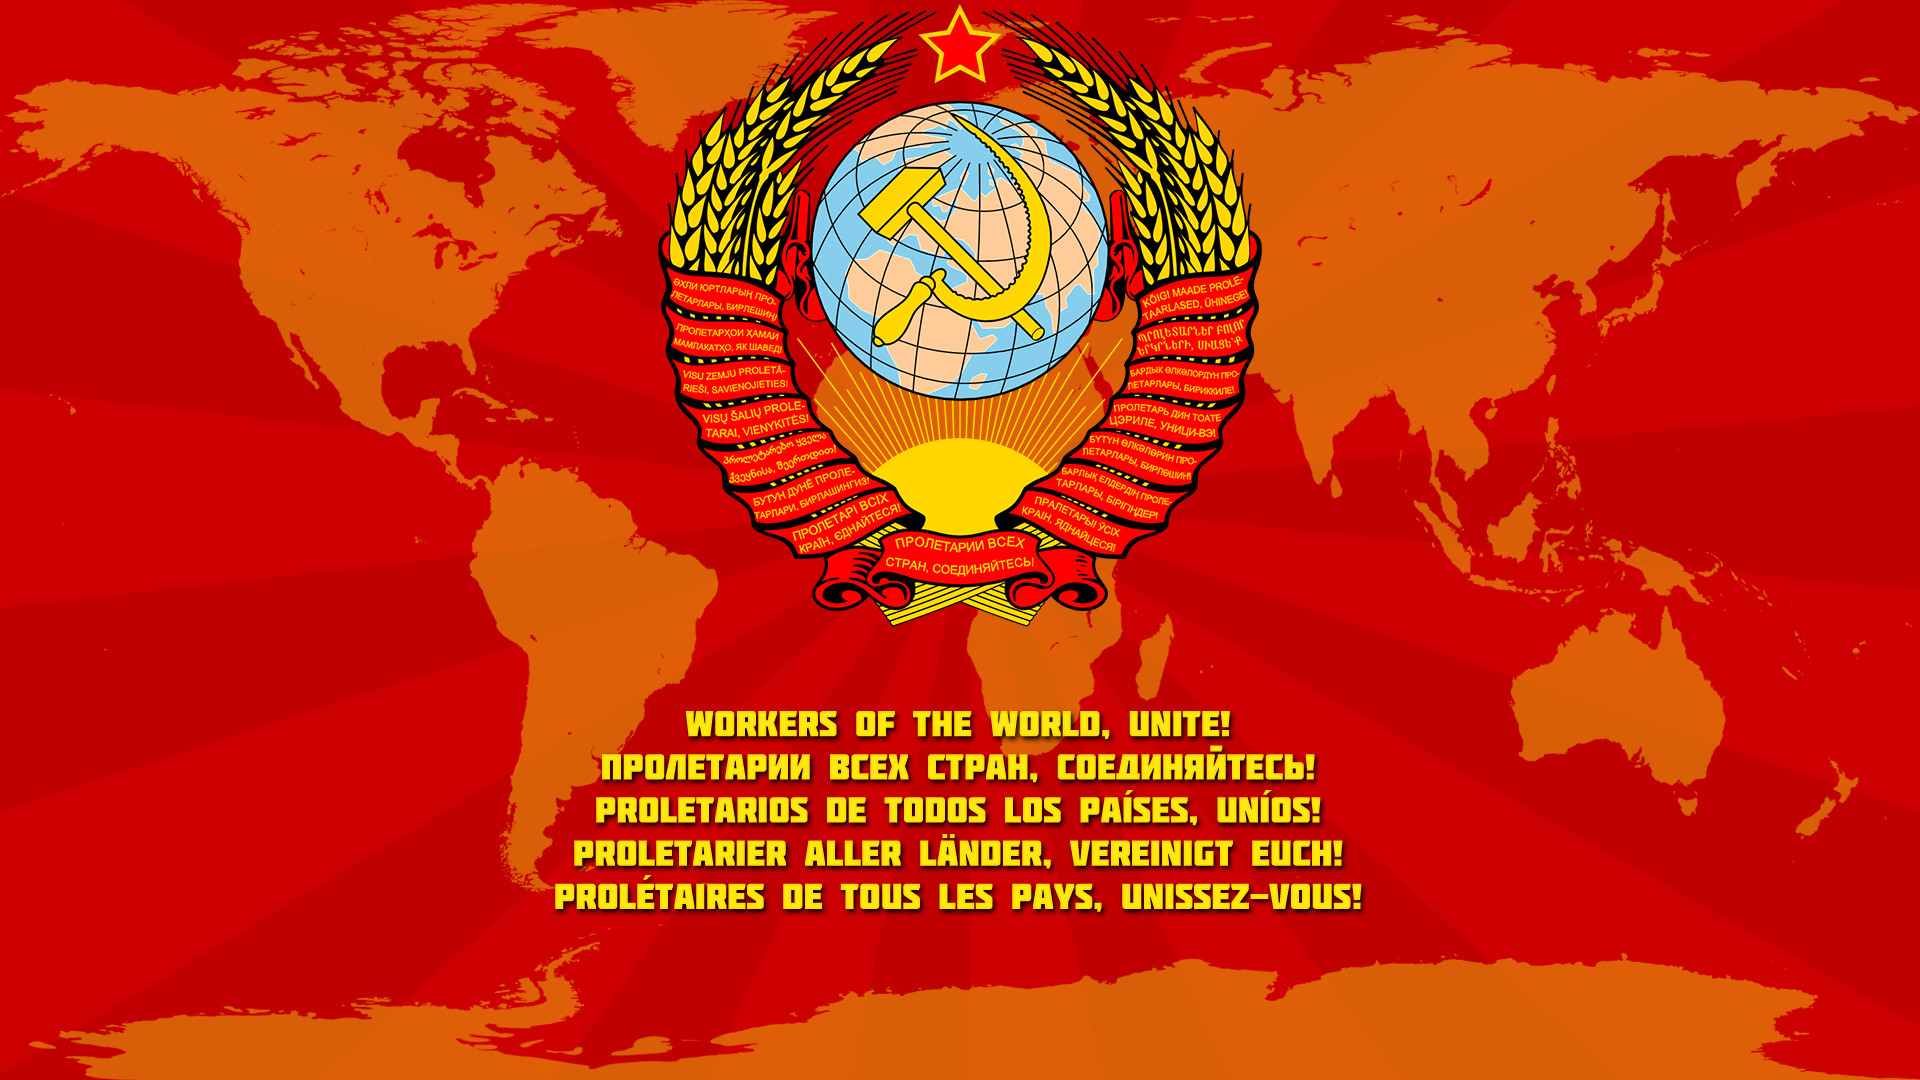 1920x1080 European communism - propaganda by Tomasz96 on DeviantArt